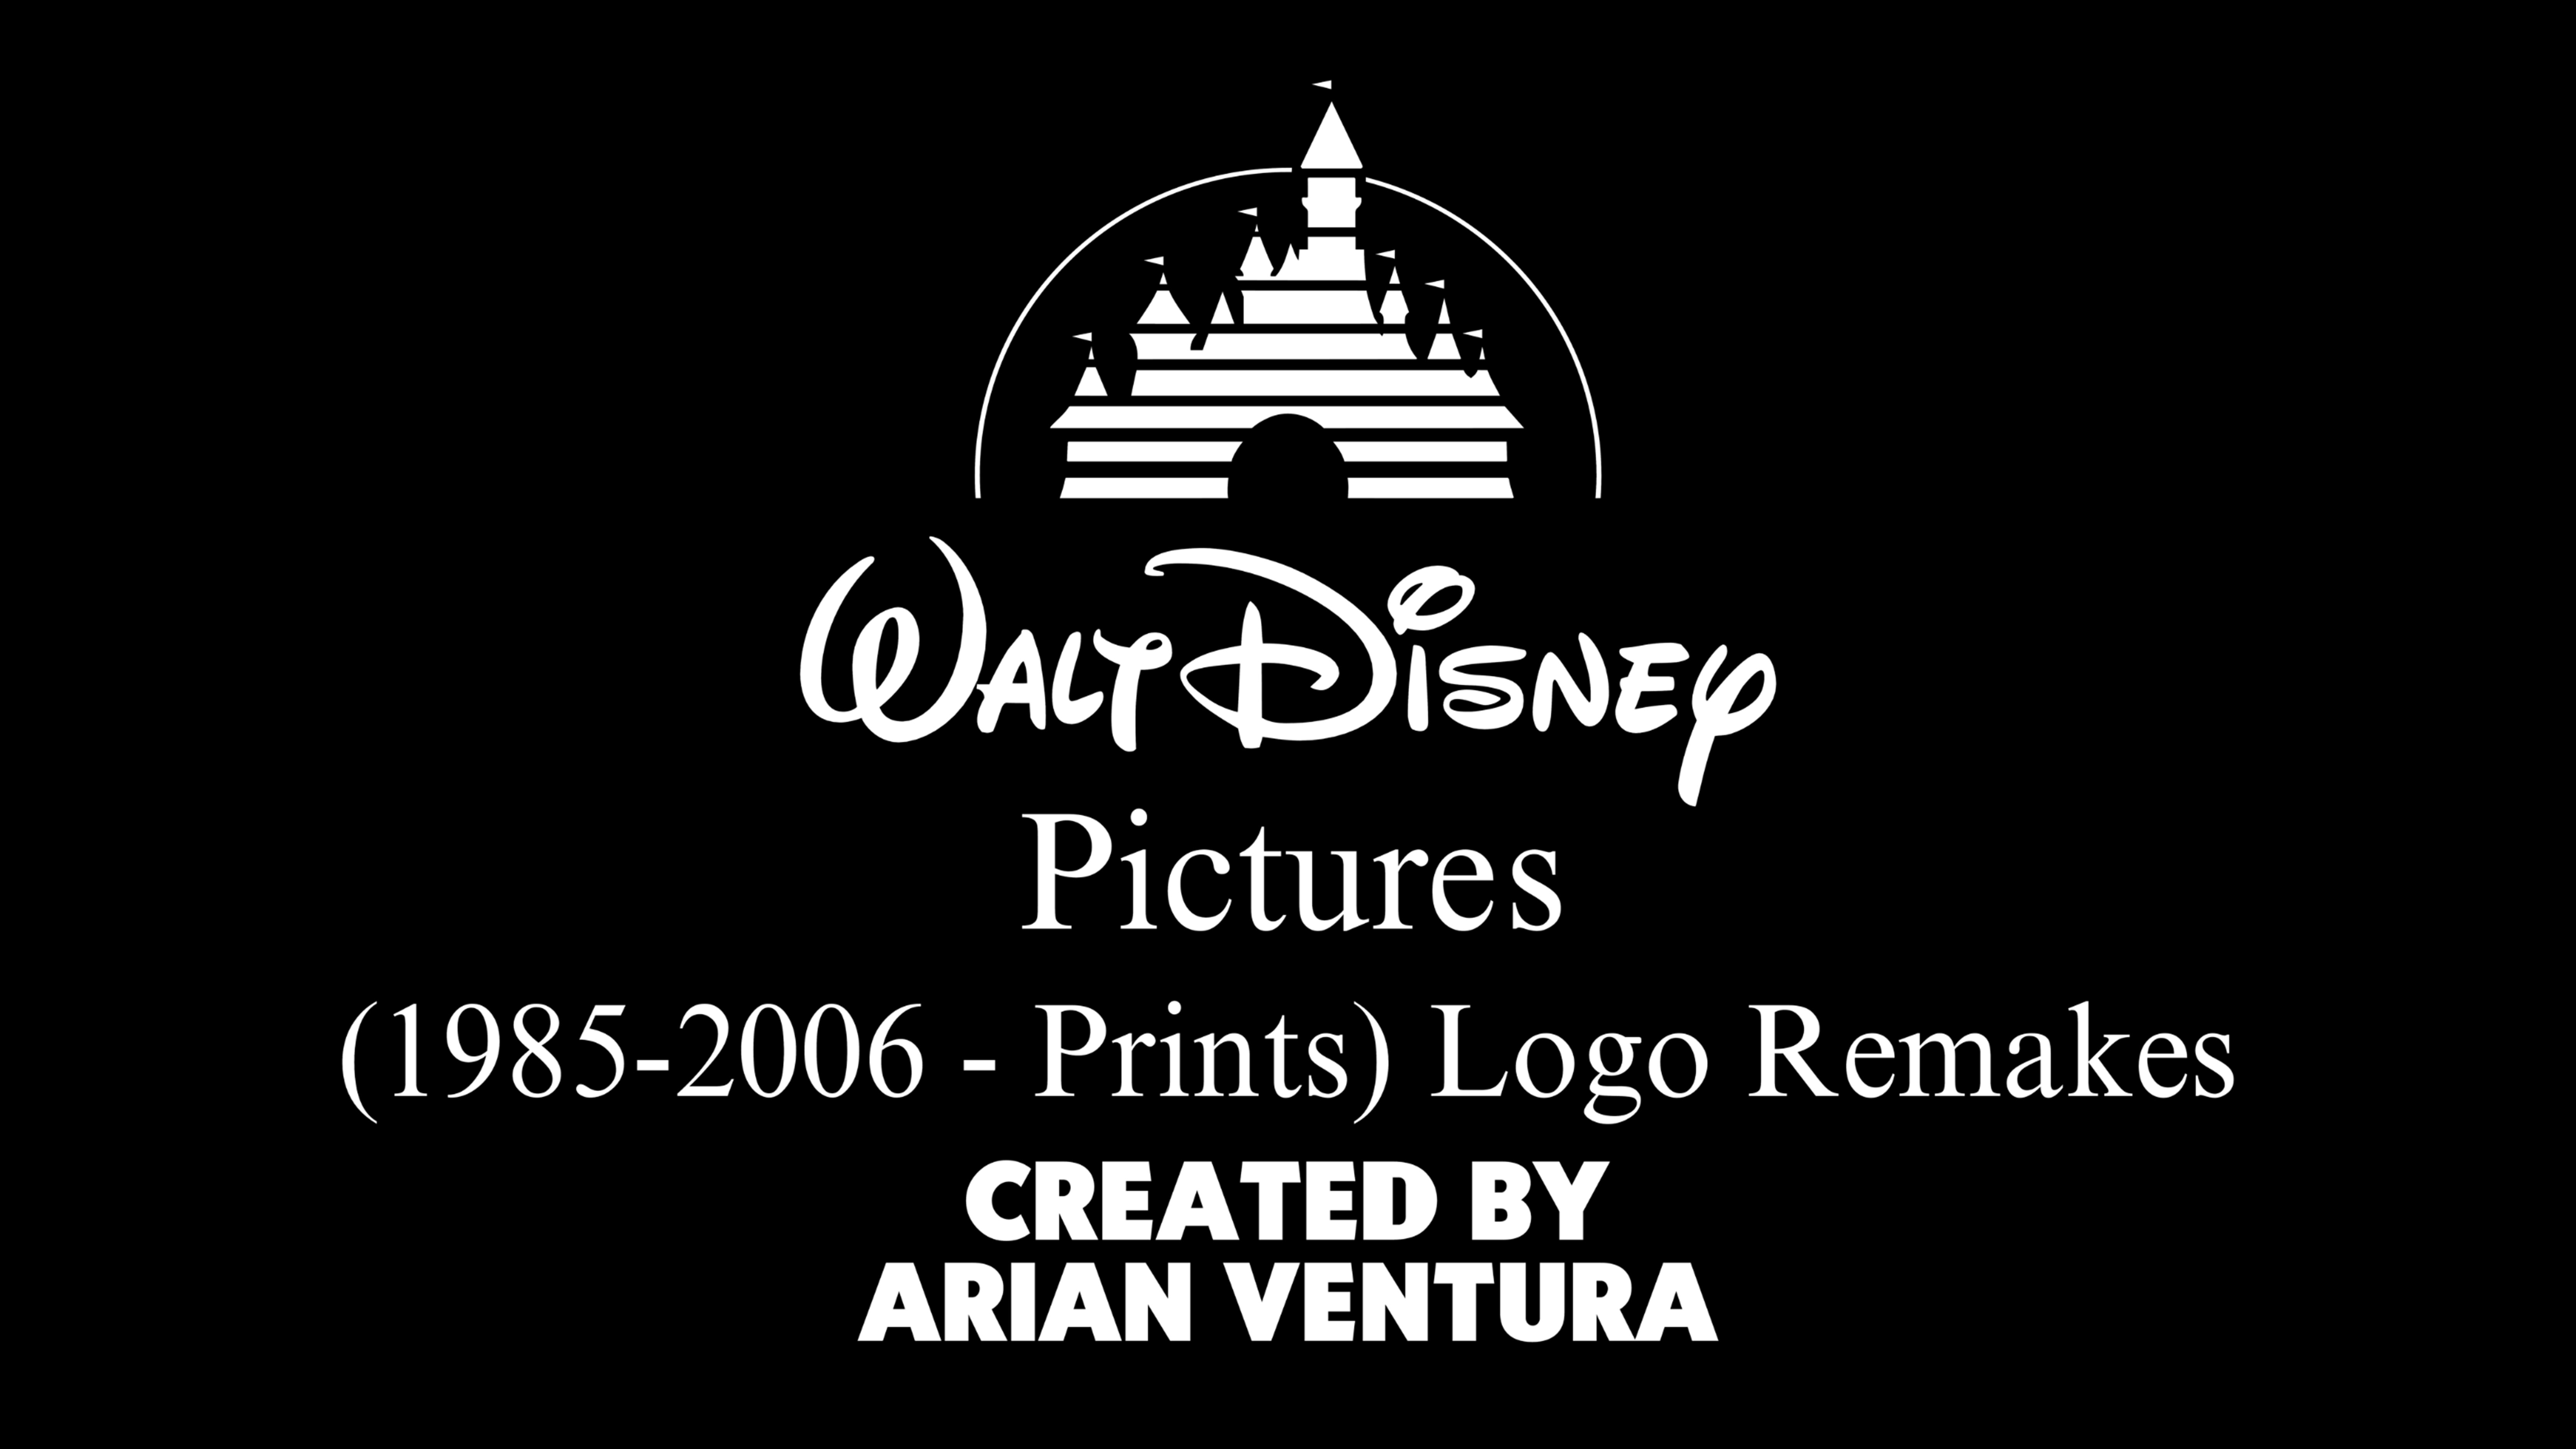 Walt Disney Pictures 1985 2006 Prints Remakes By Arianvp On Deviantart